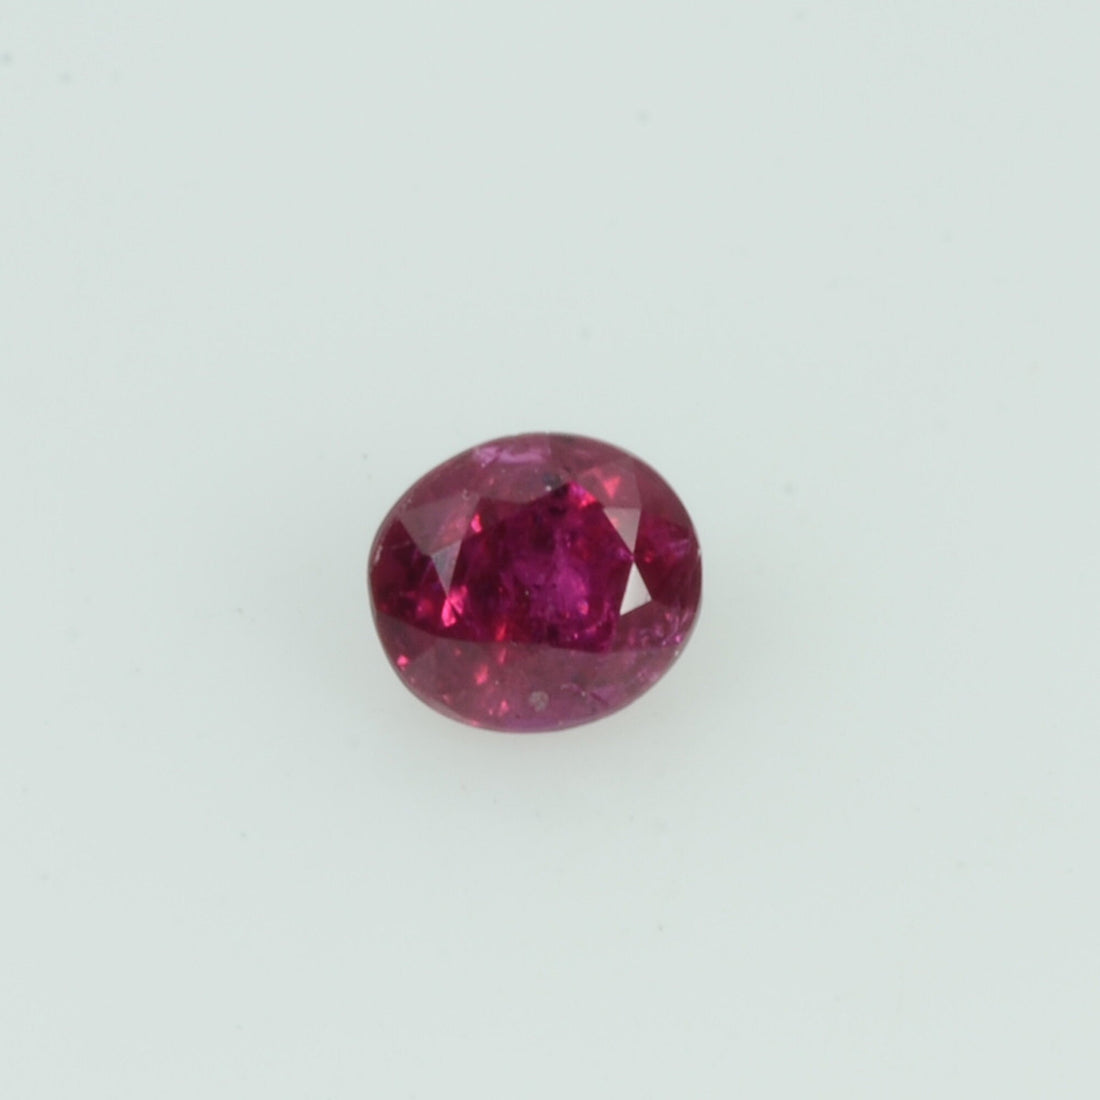 0.24 Cts Natural Burma Ruby Loose Gemstone Oval Cut